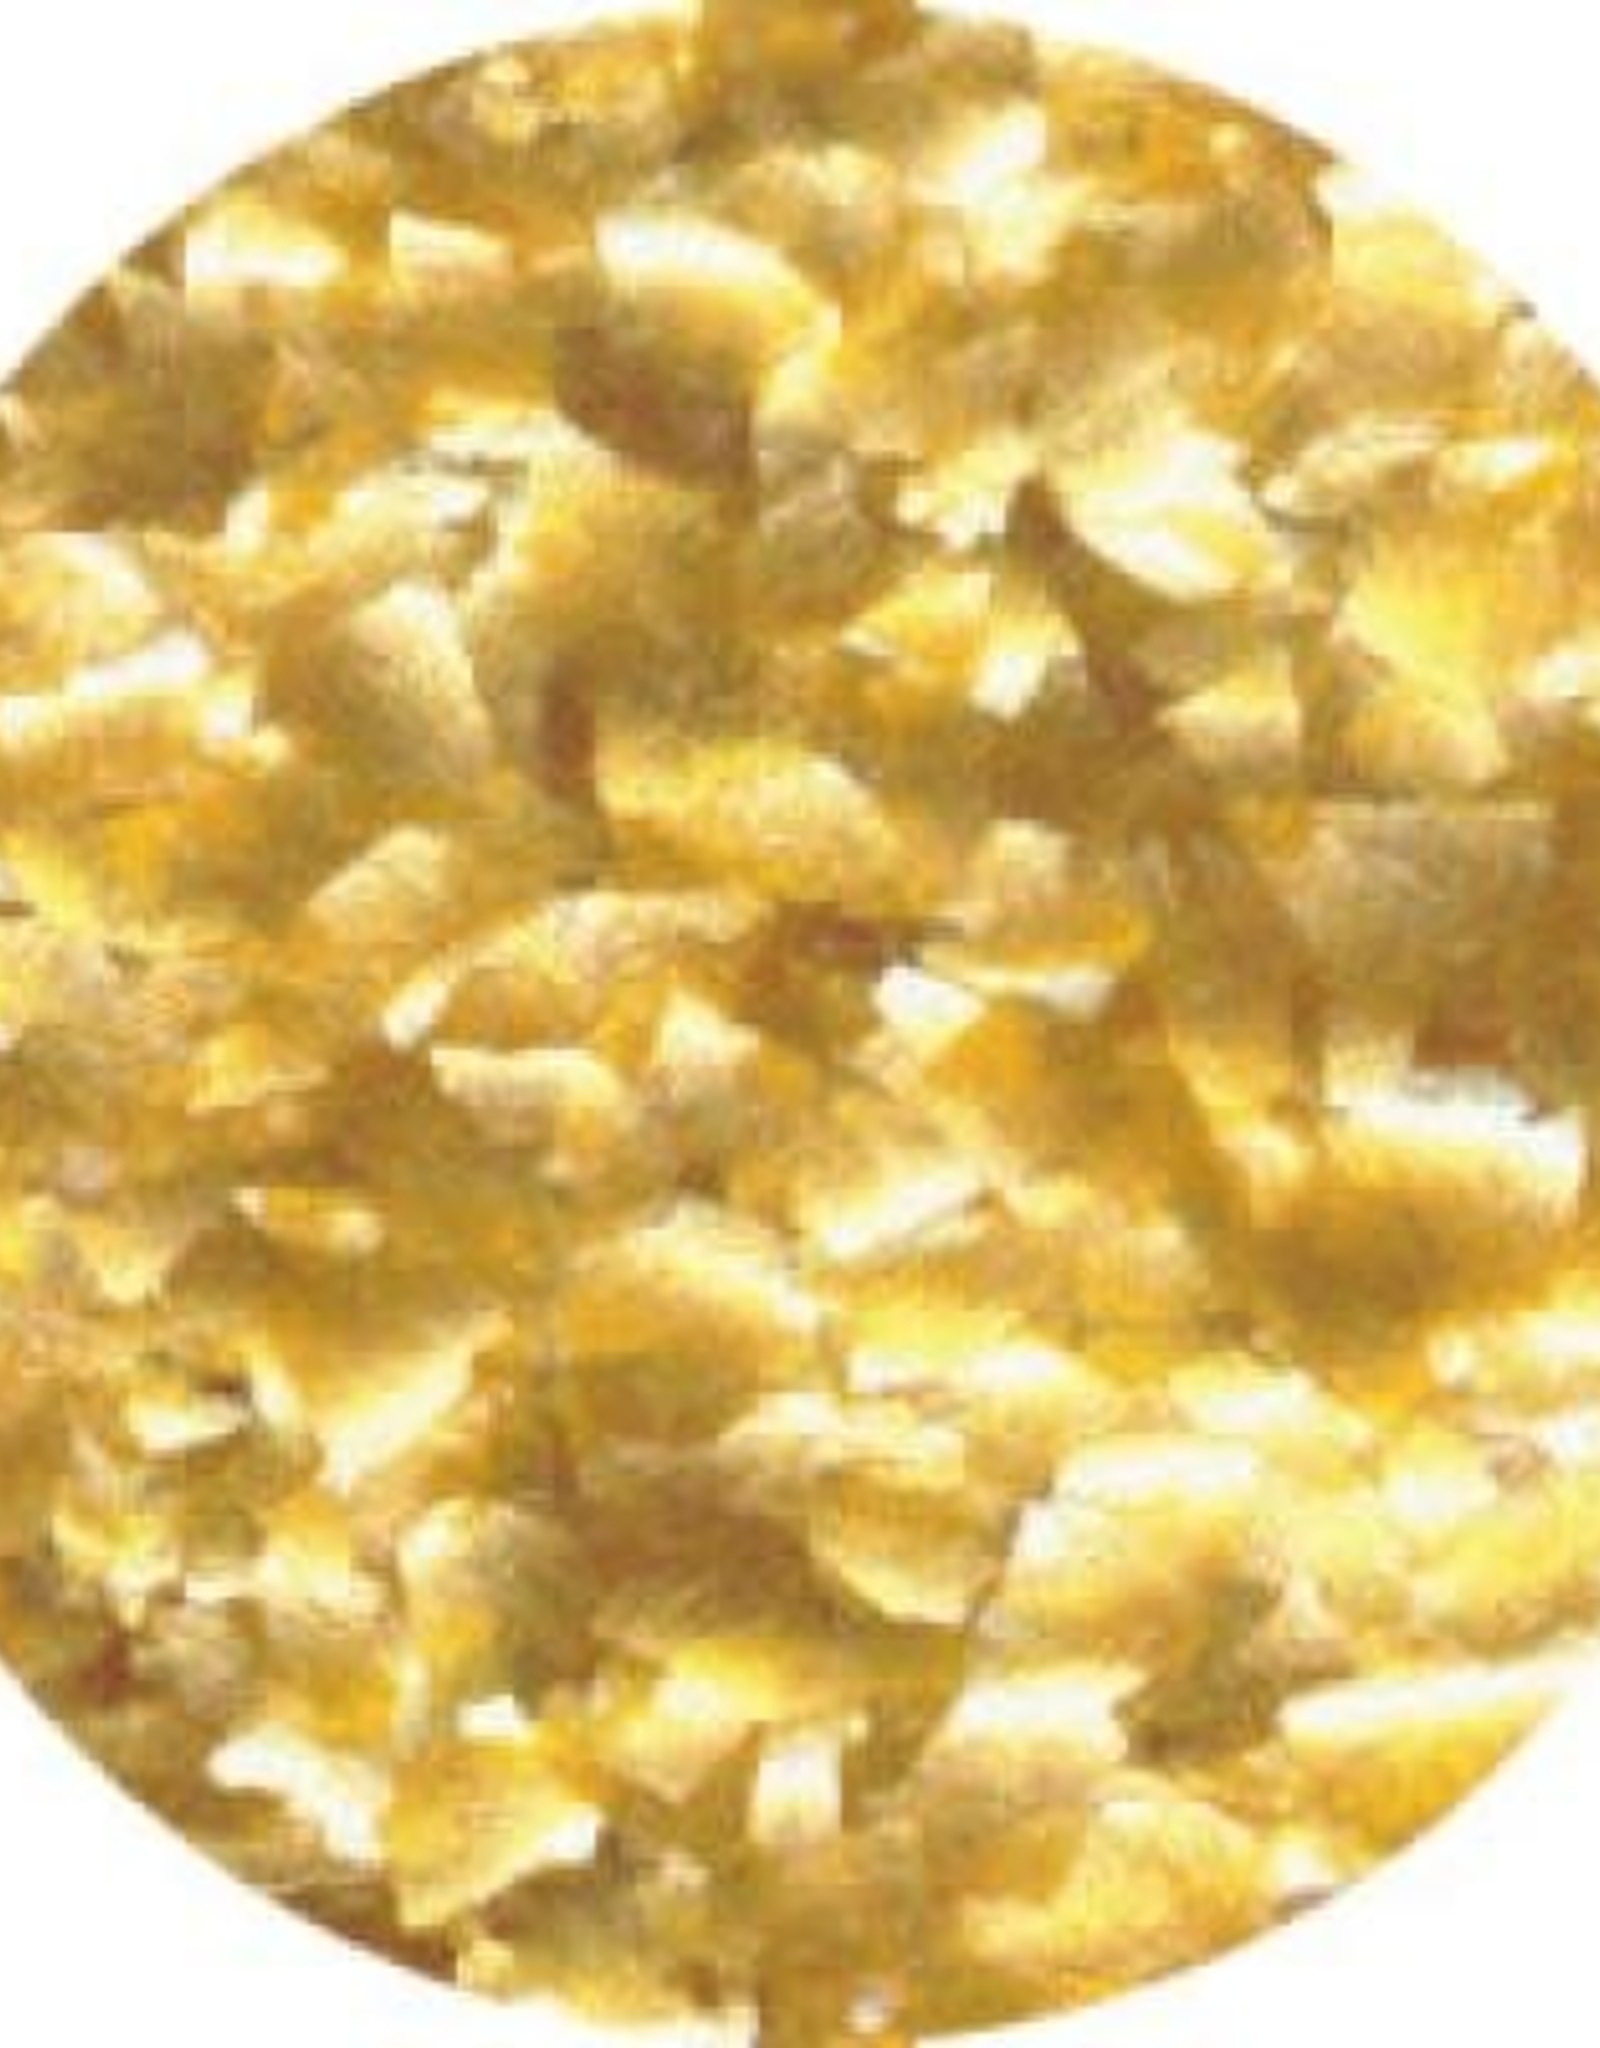 Edible Glitter (Metallic Gold)